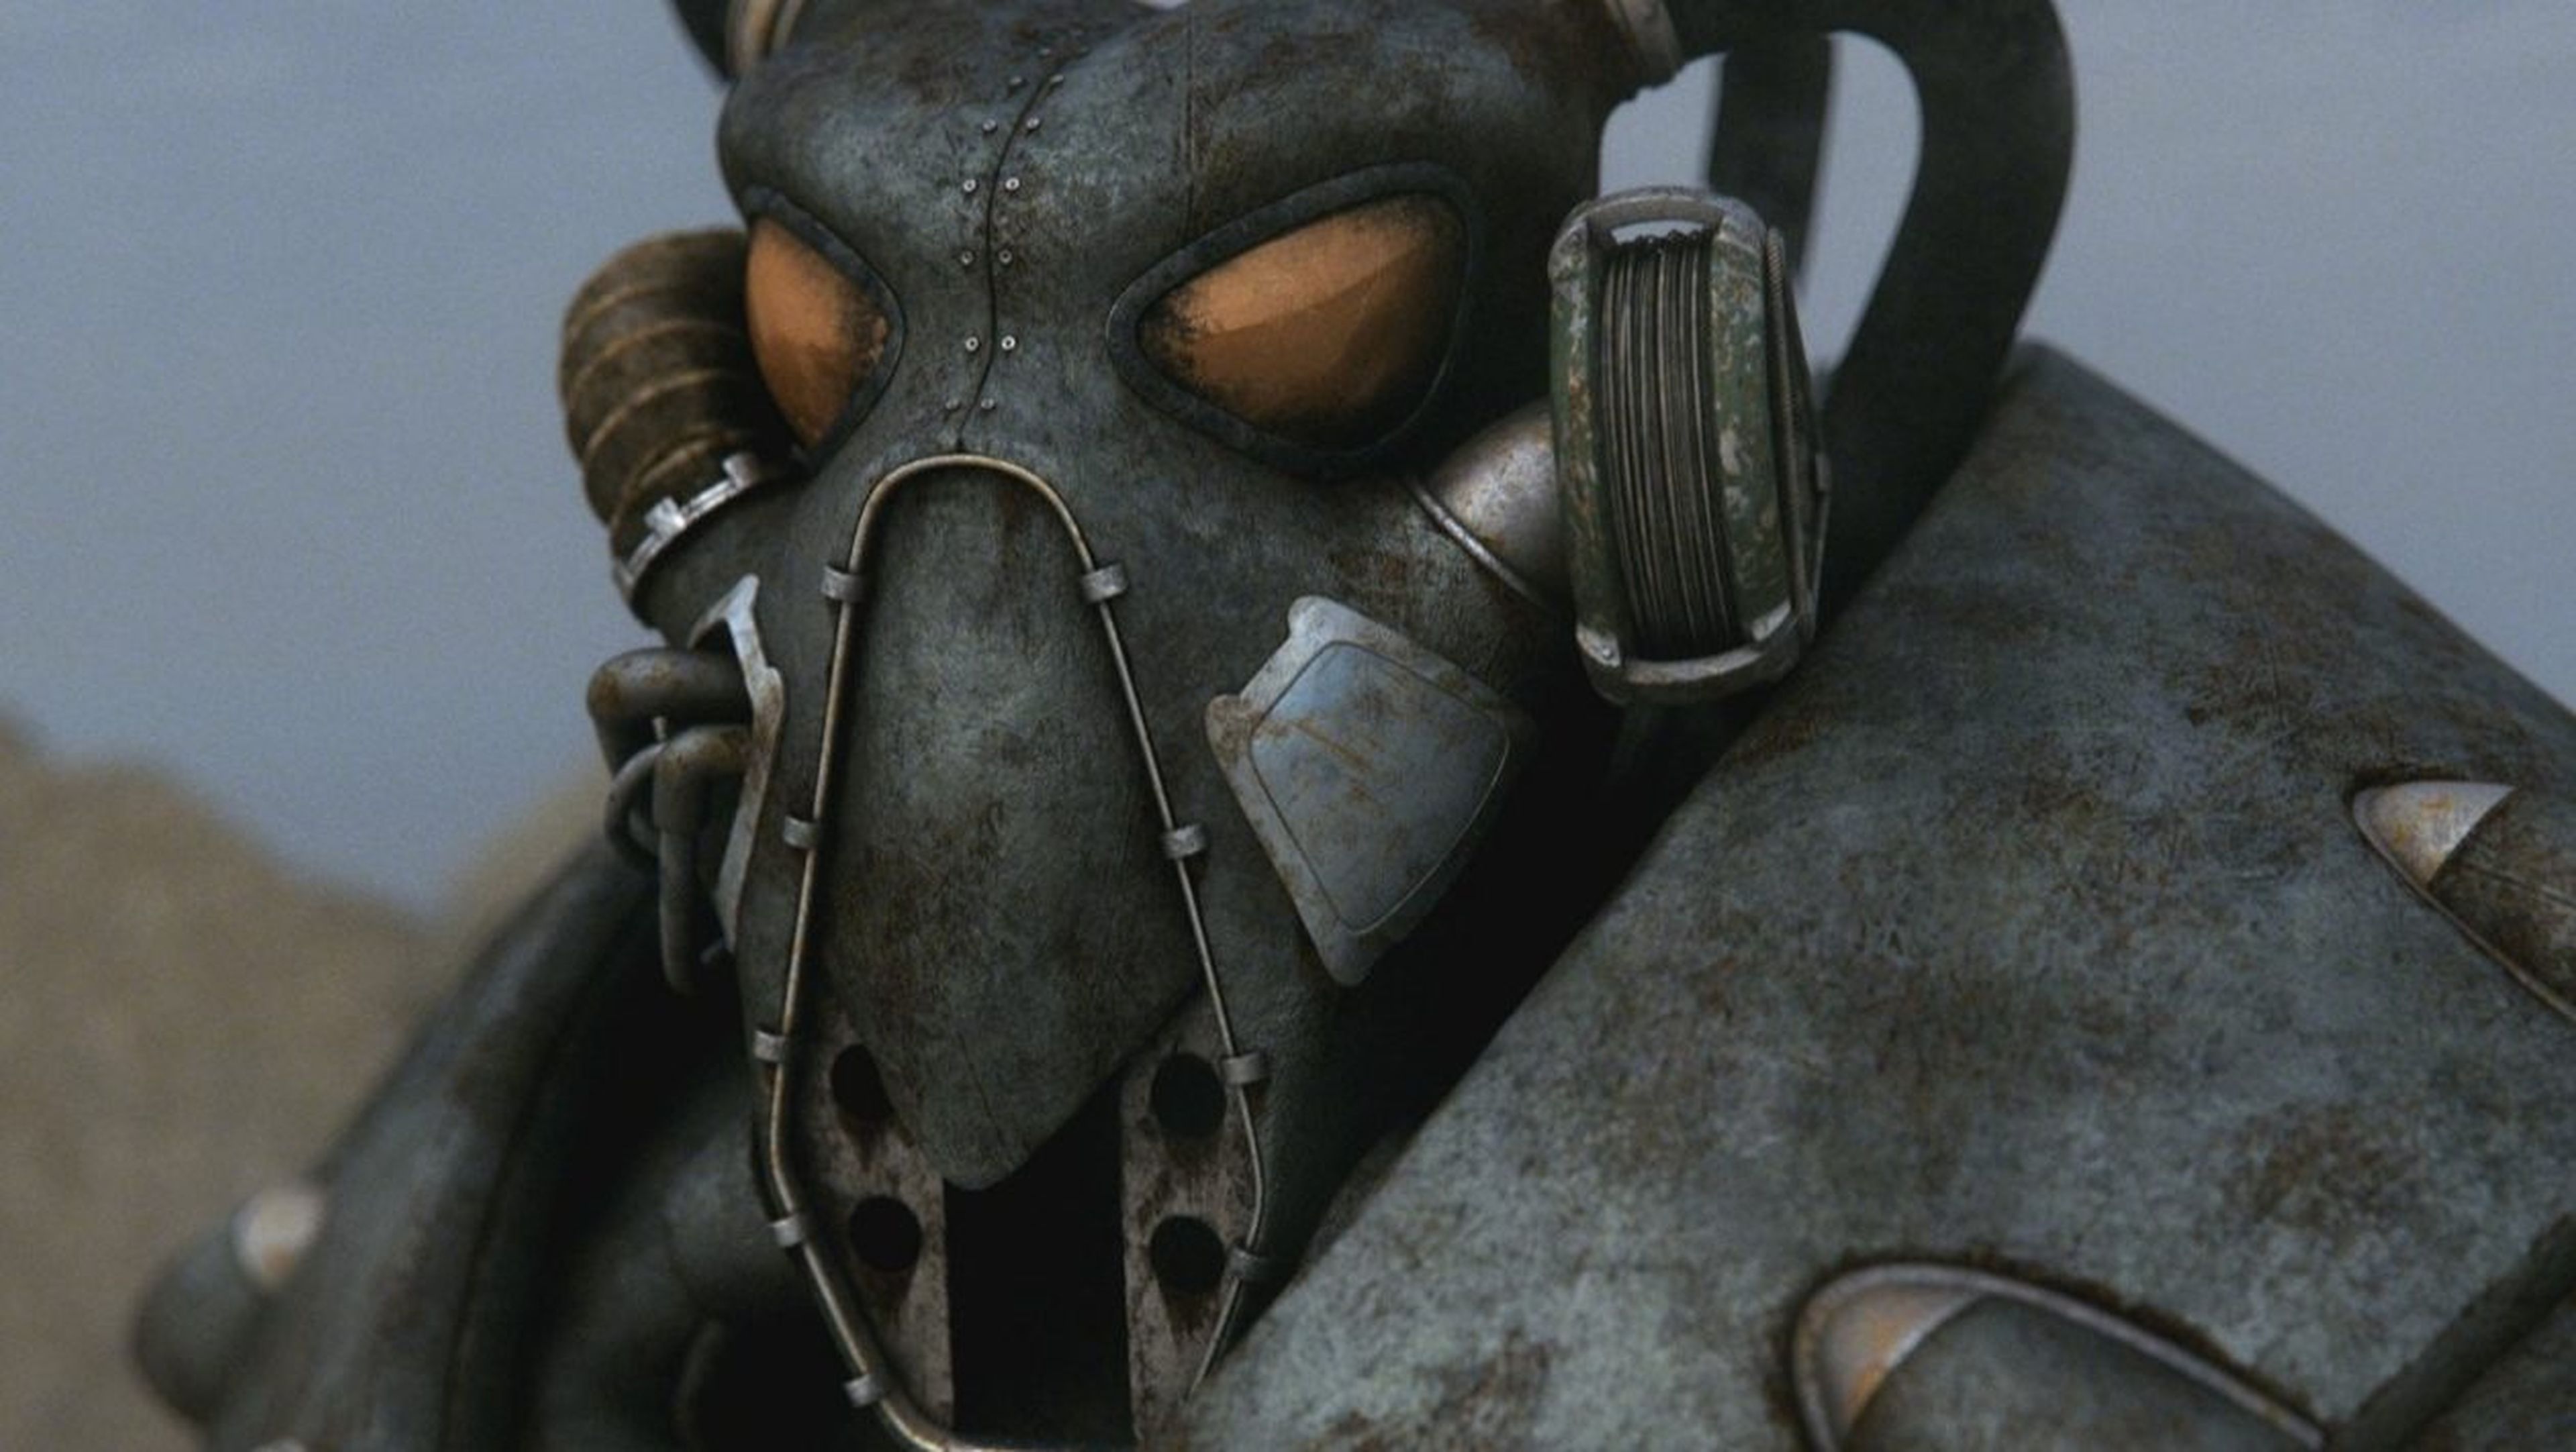 Фол аут. Fallout 2 Enclave. Силовая броня фоллаут 2 арт. Fallout 2 Power Armor. Enclave Power Armor Fallout 2.